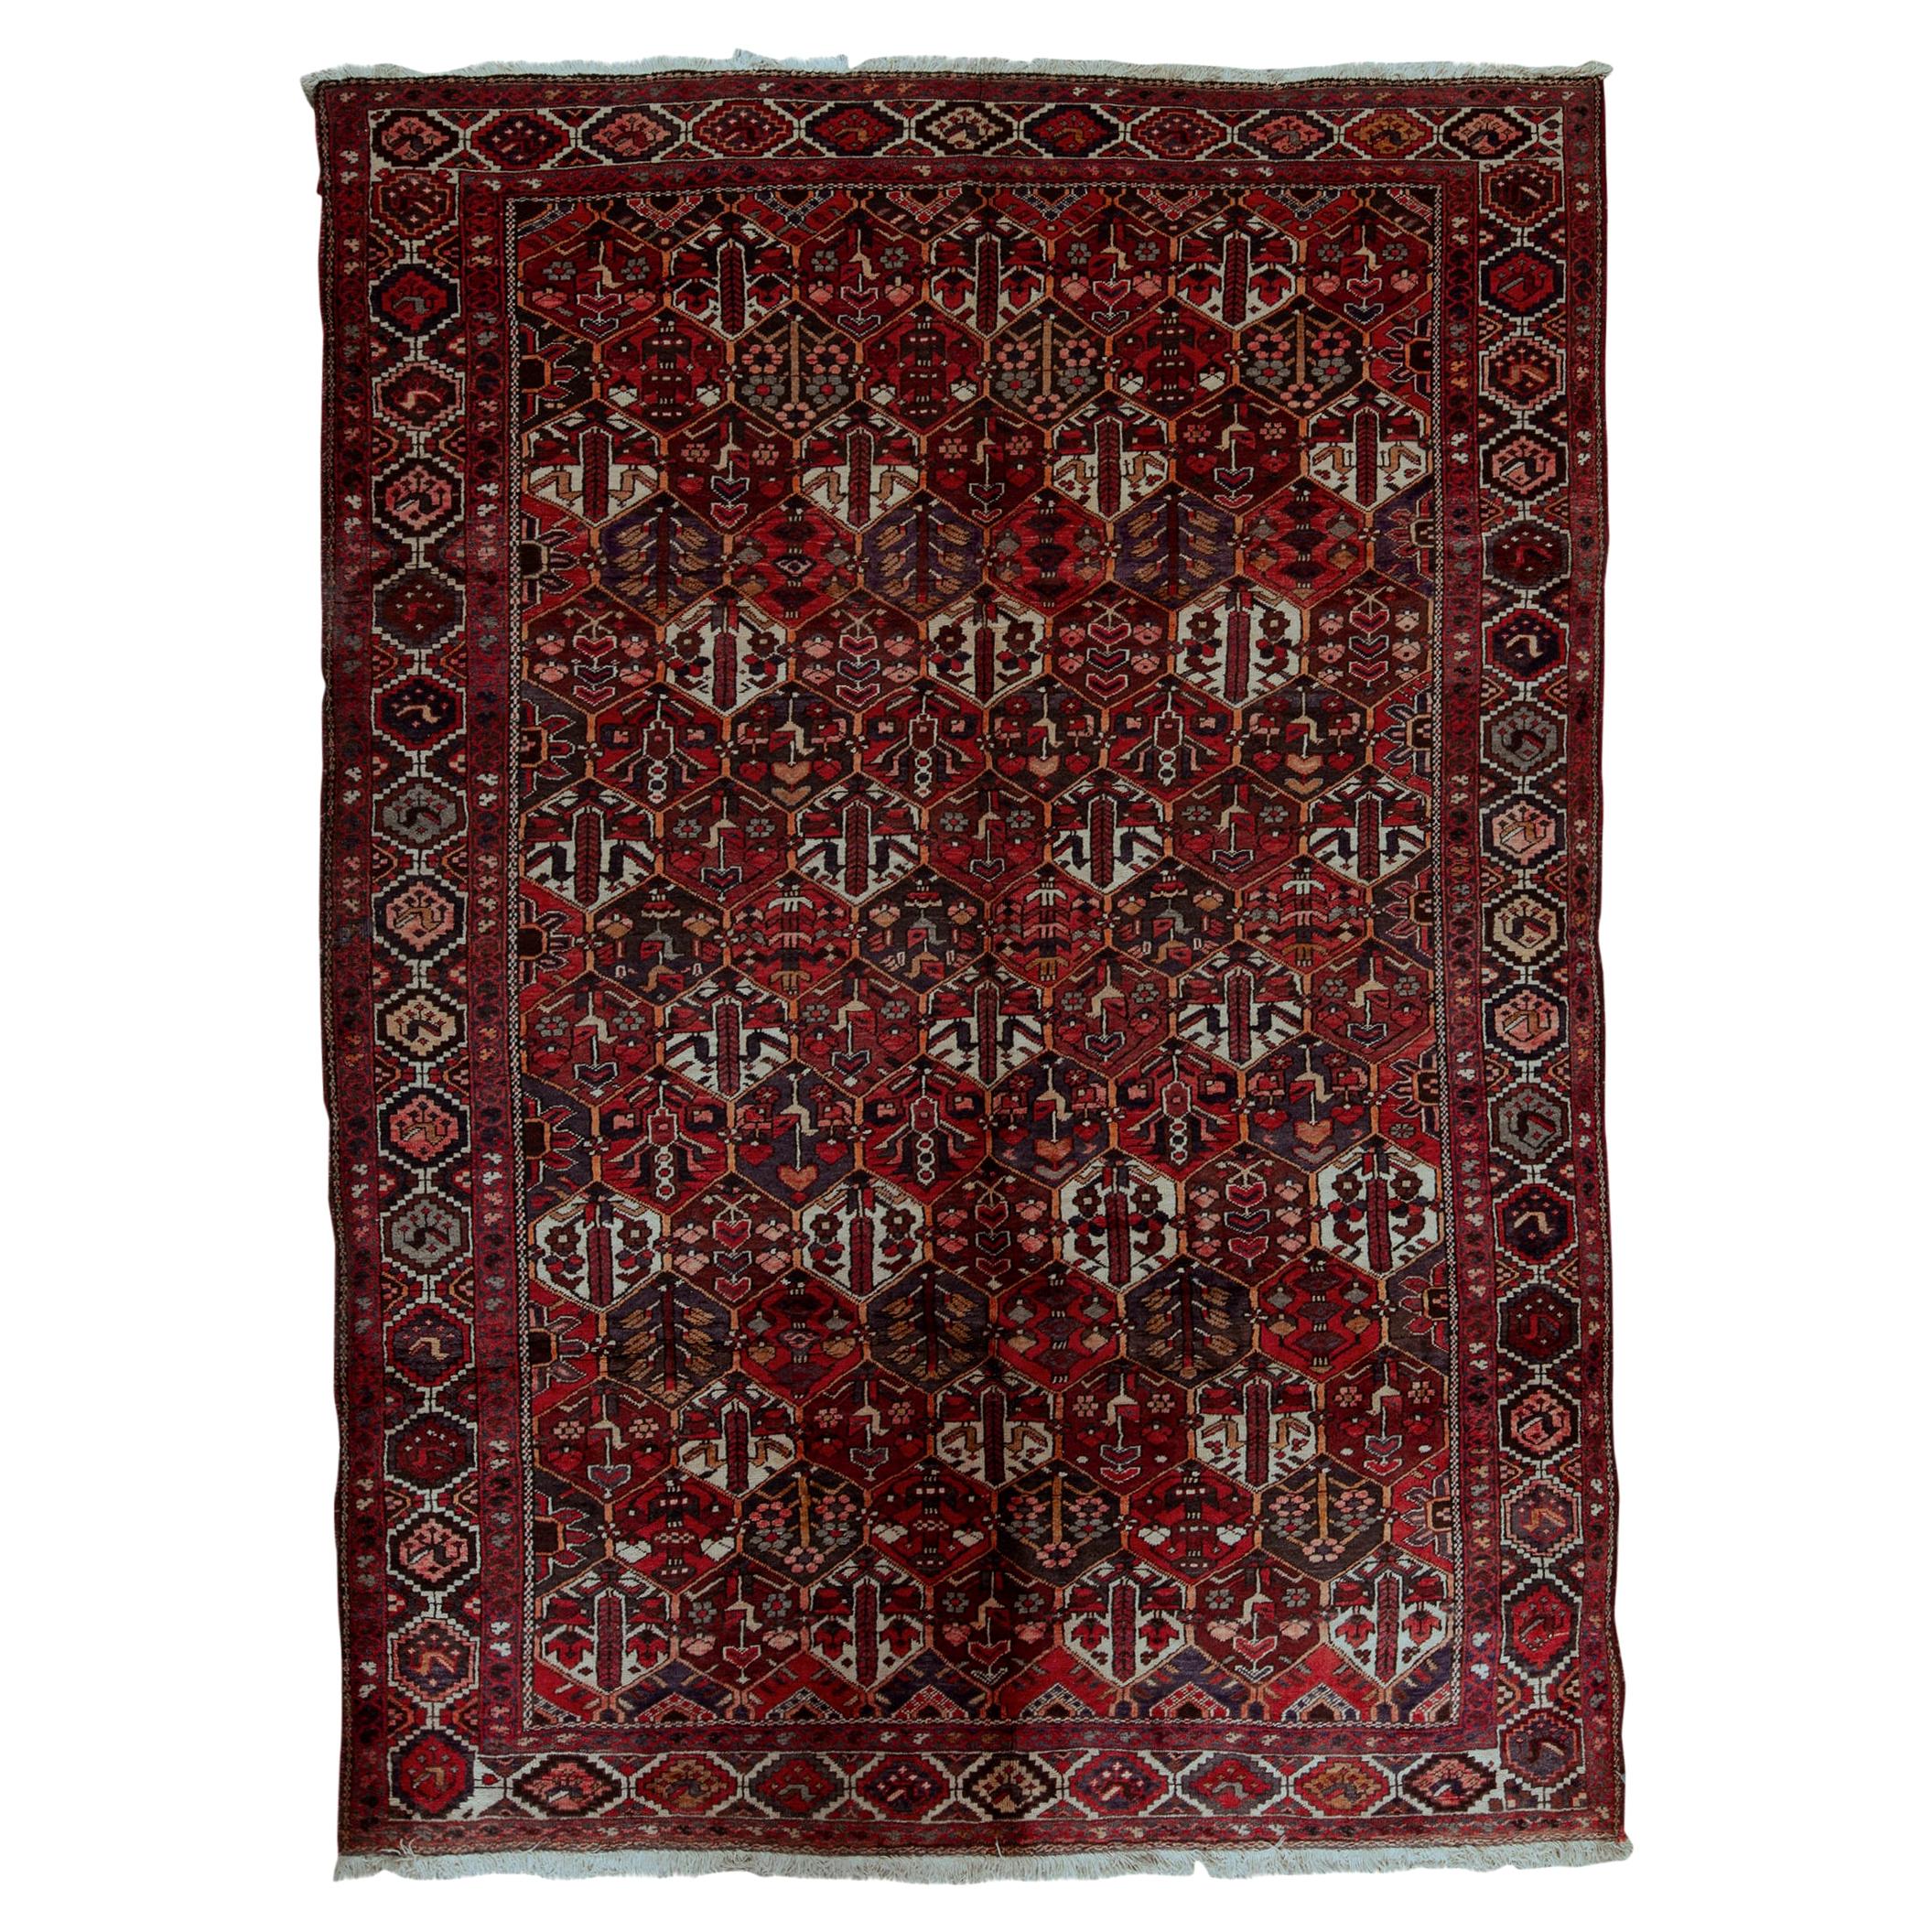  Antique Persian fine Traditional Handwoven Luxury Wool Rust / Navy Rug